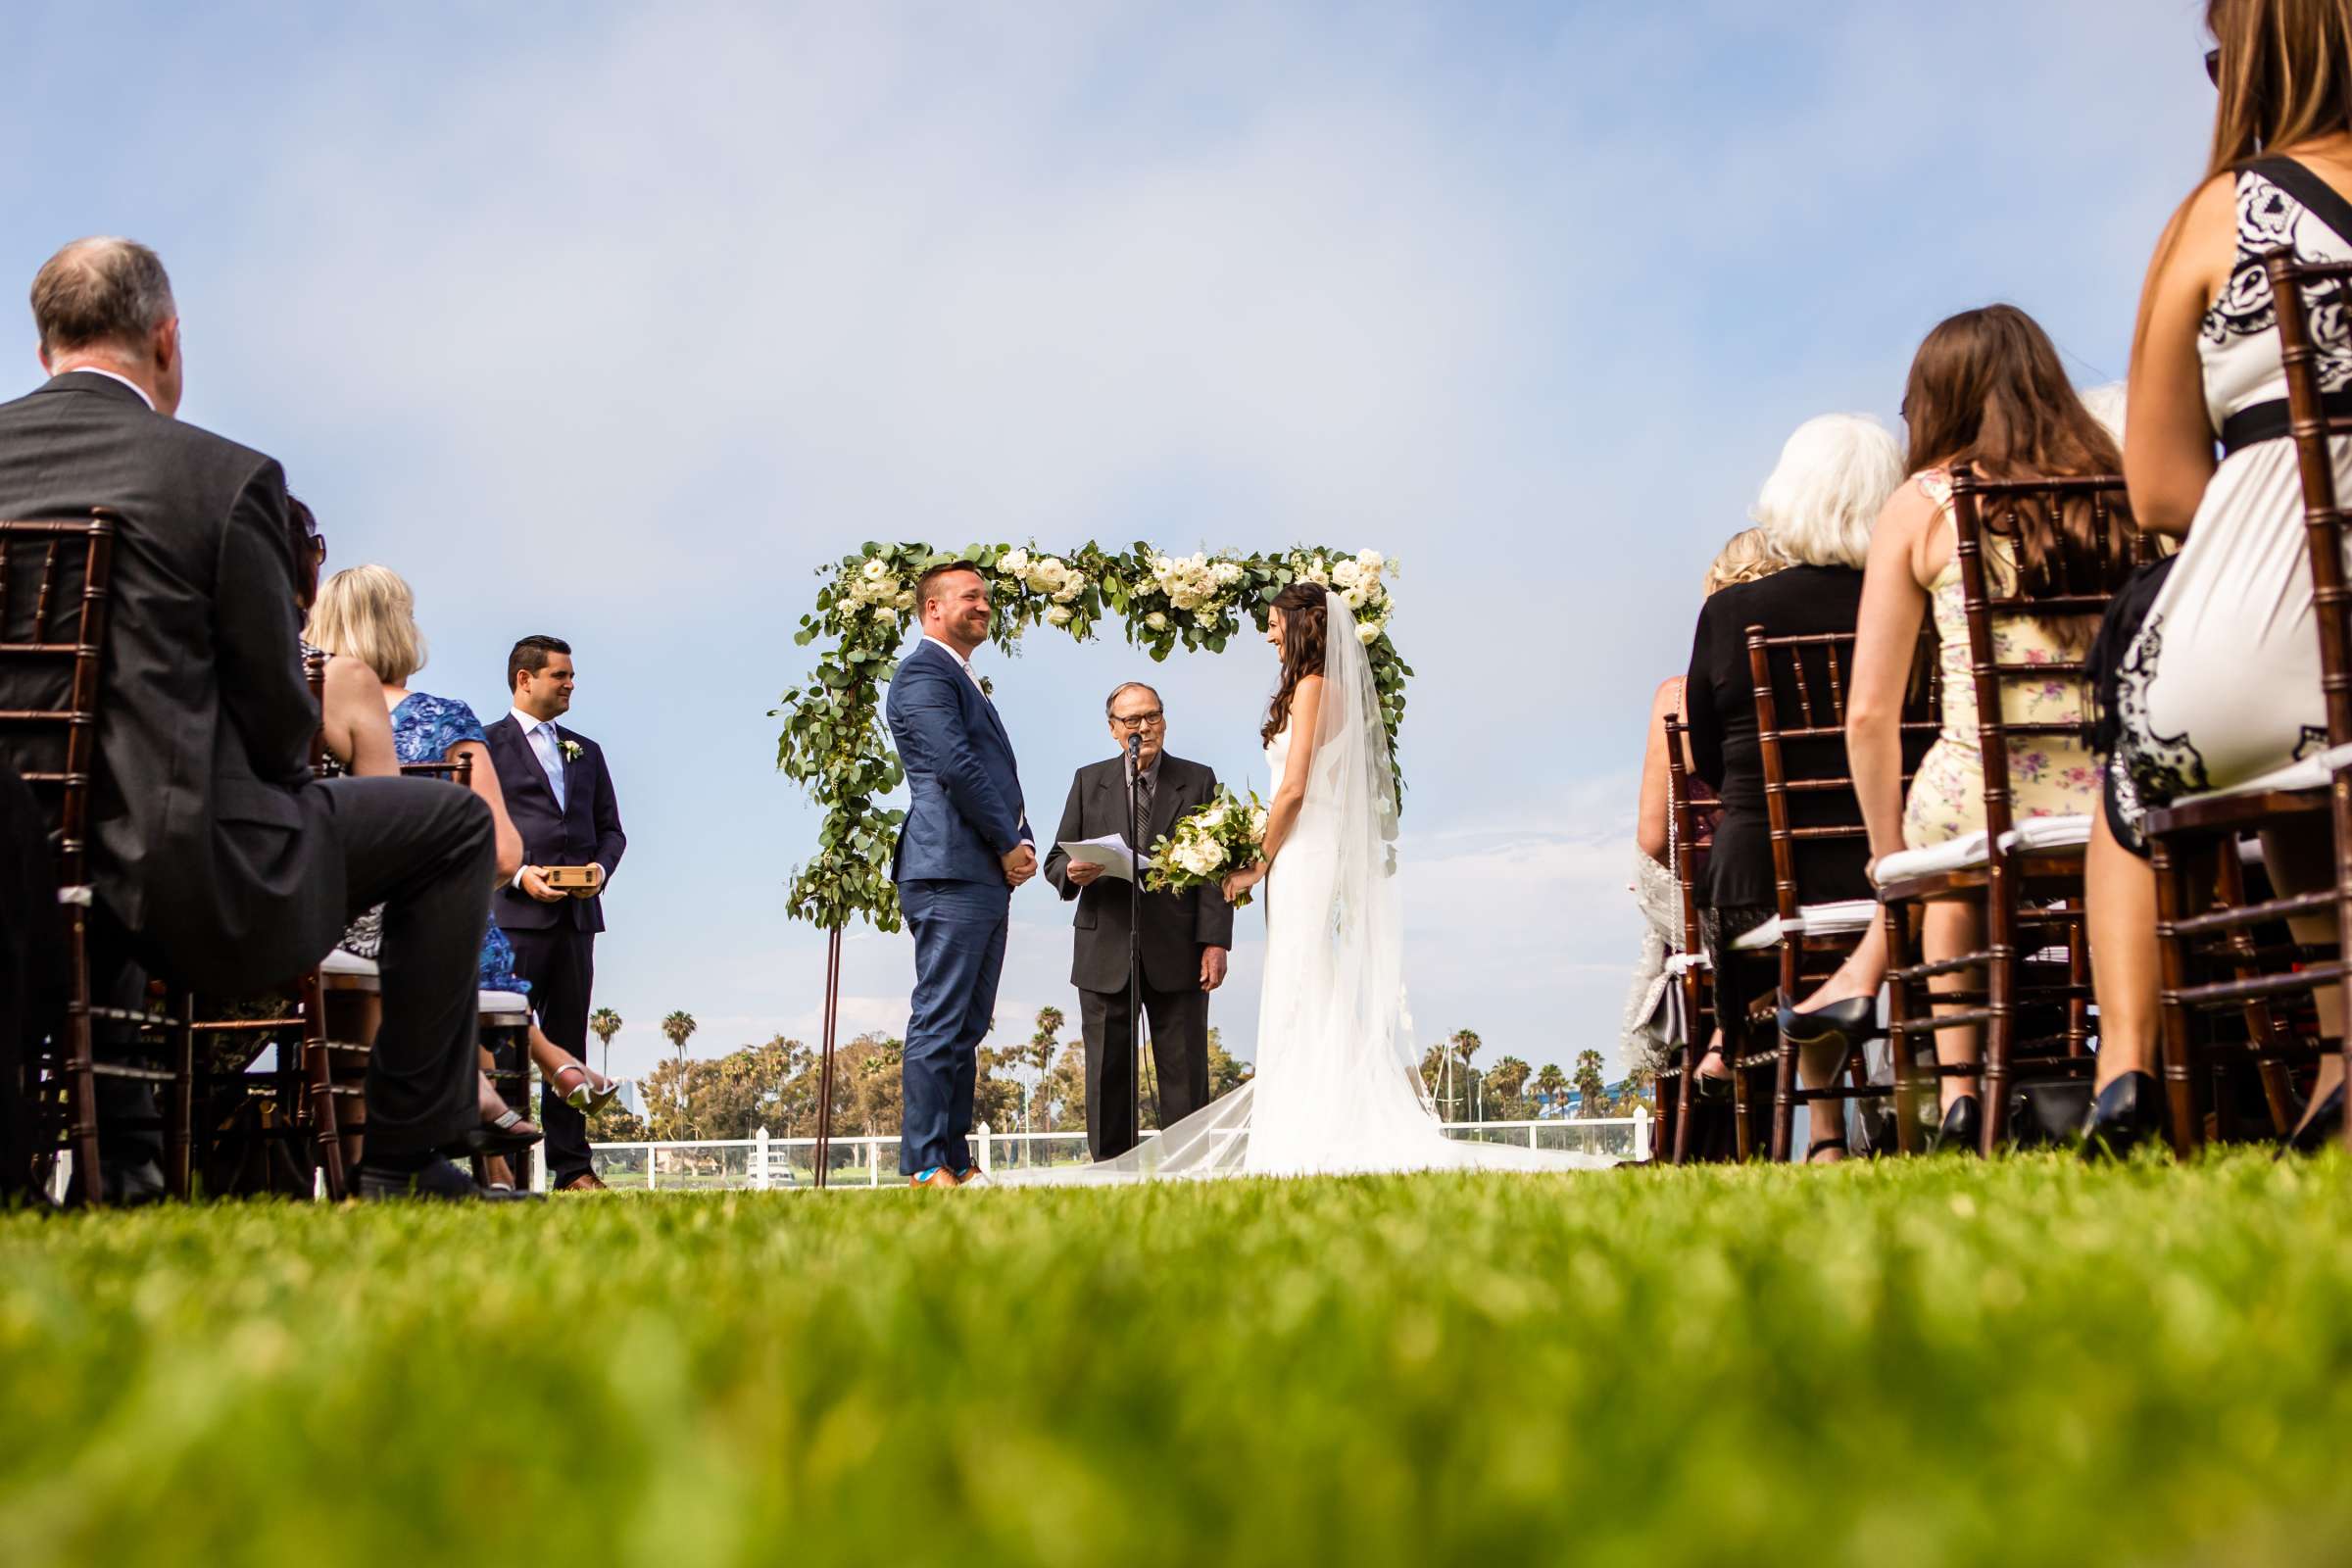 Coronado Community Center Wedding coordinated by Breezy Day Weddings, Cheryl and Tim Wedding Photo #67 by True Photography